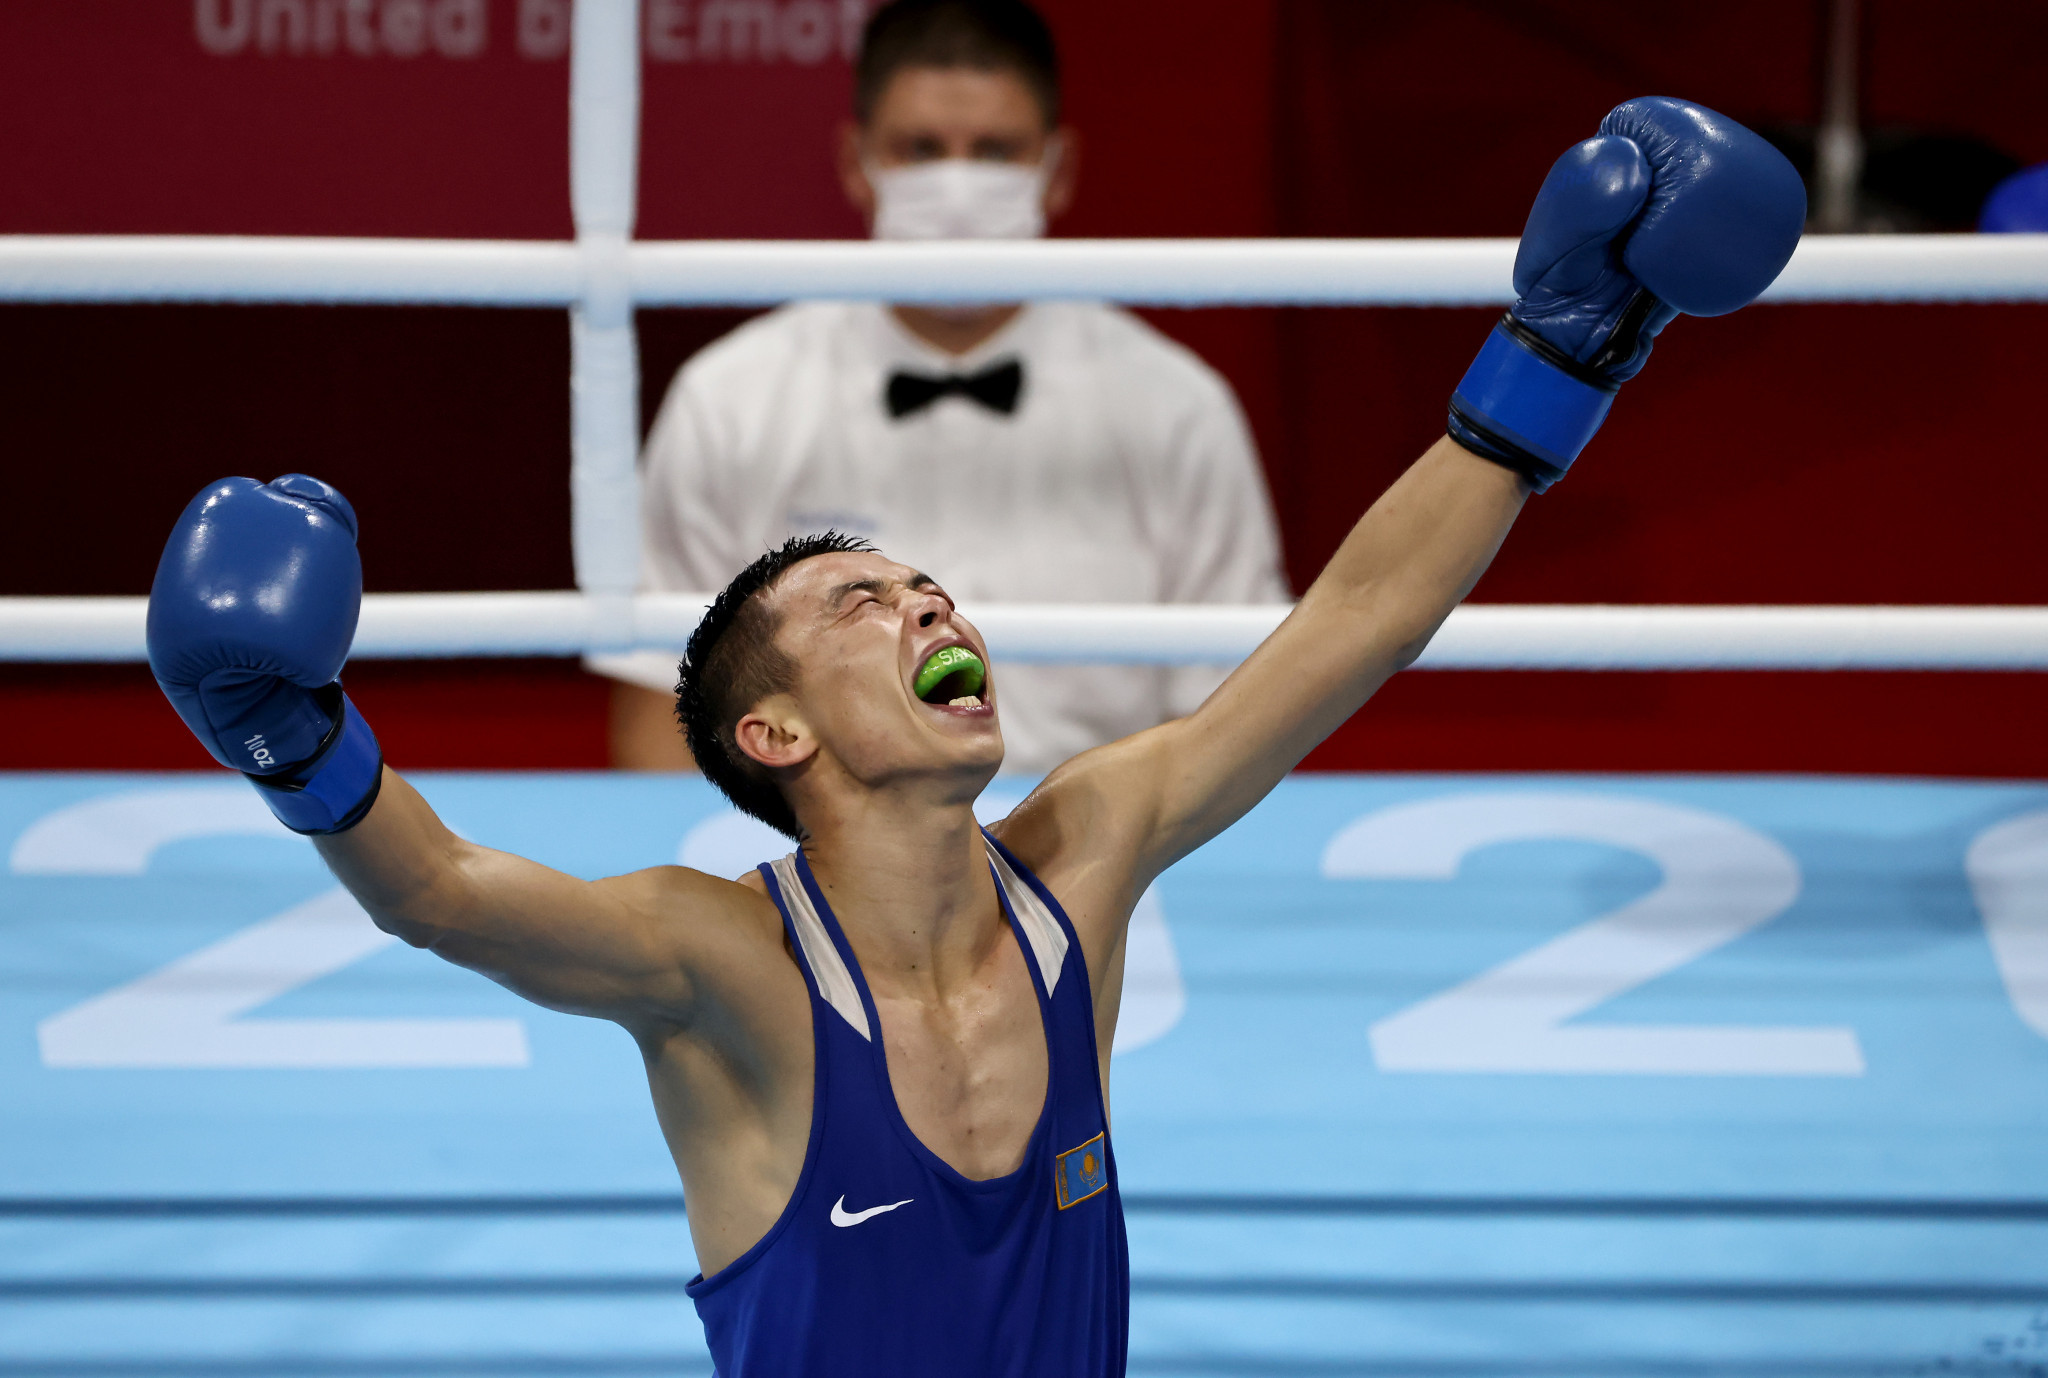 Saken Bibossinov of Kazakhstan won today at the Asian Boxing Championships ©Getty Images